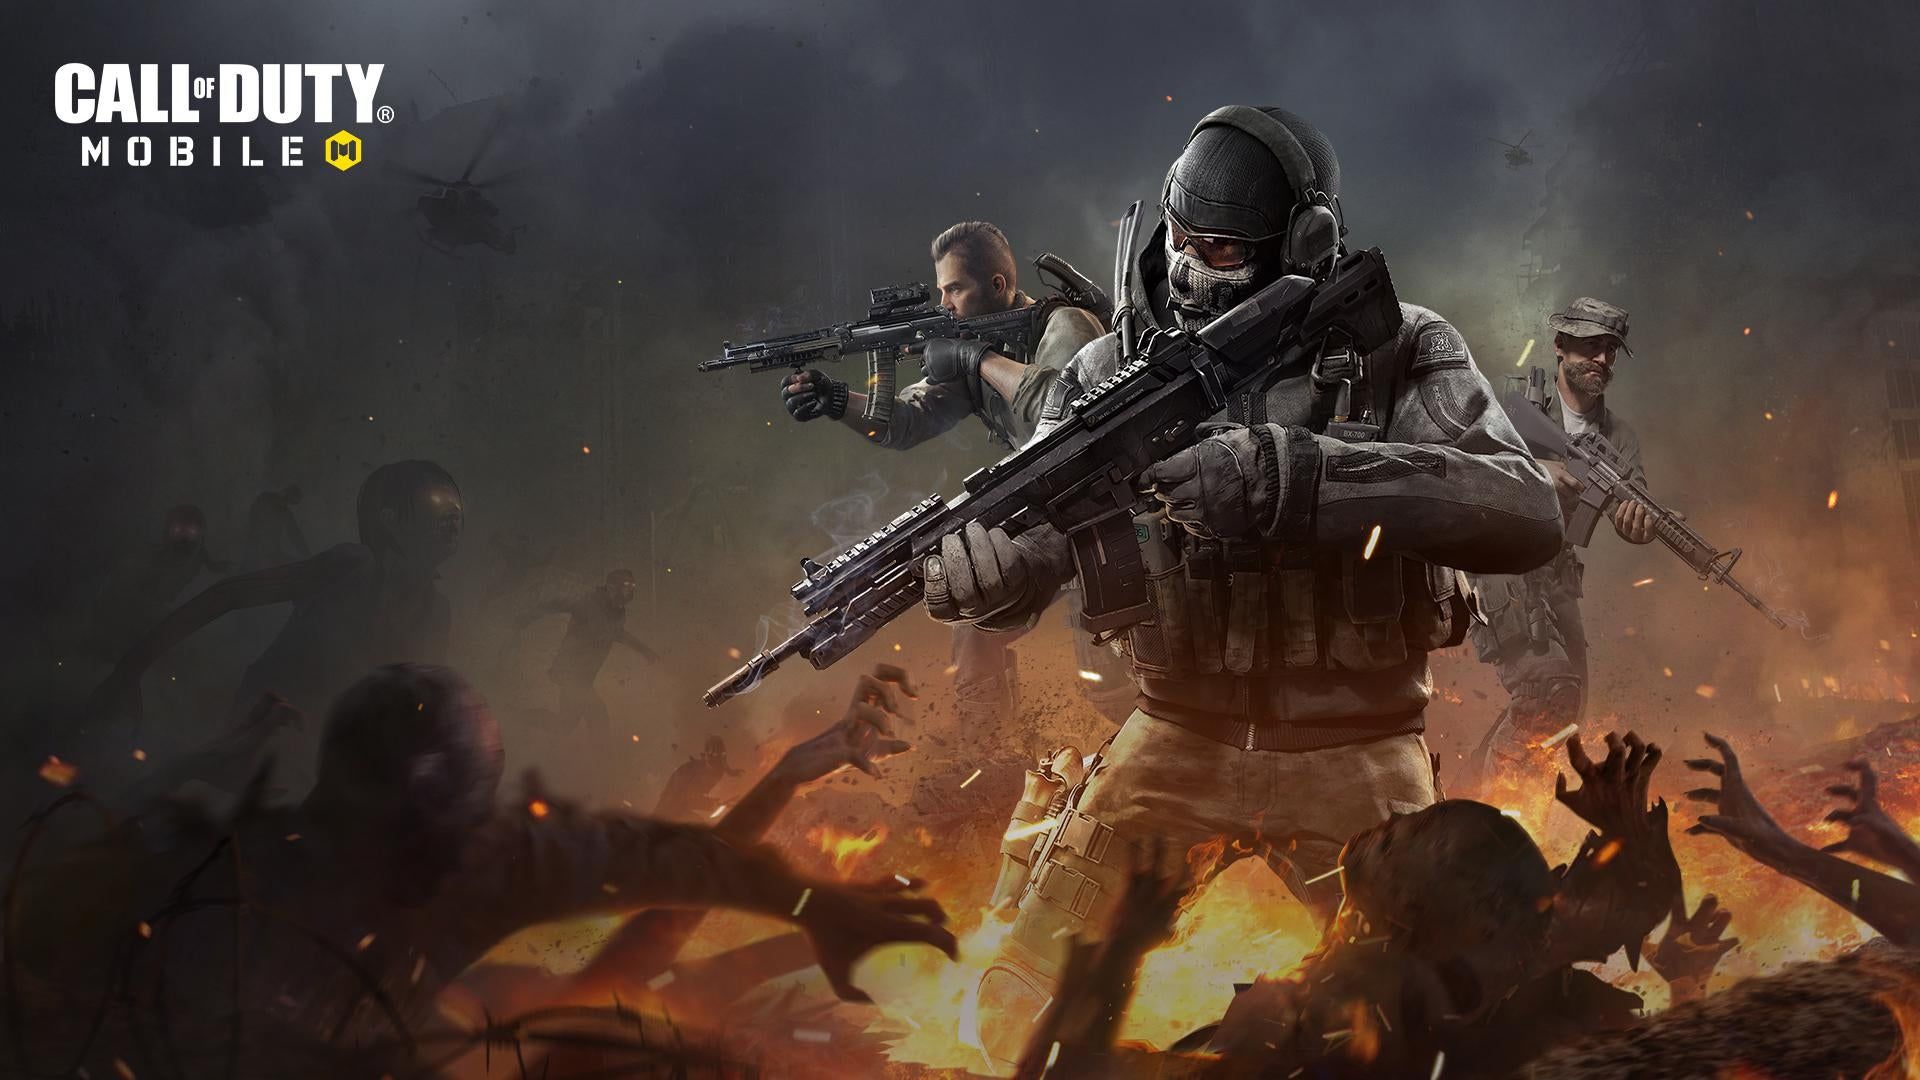 Анімація скіна з Call of Duty Mobile вразила мережу деталізацією та музикою Циммера